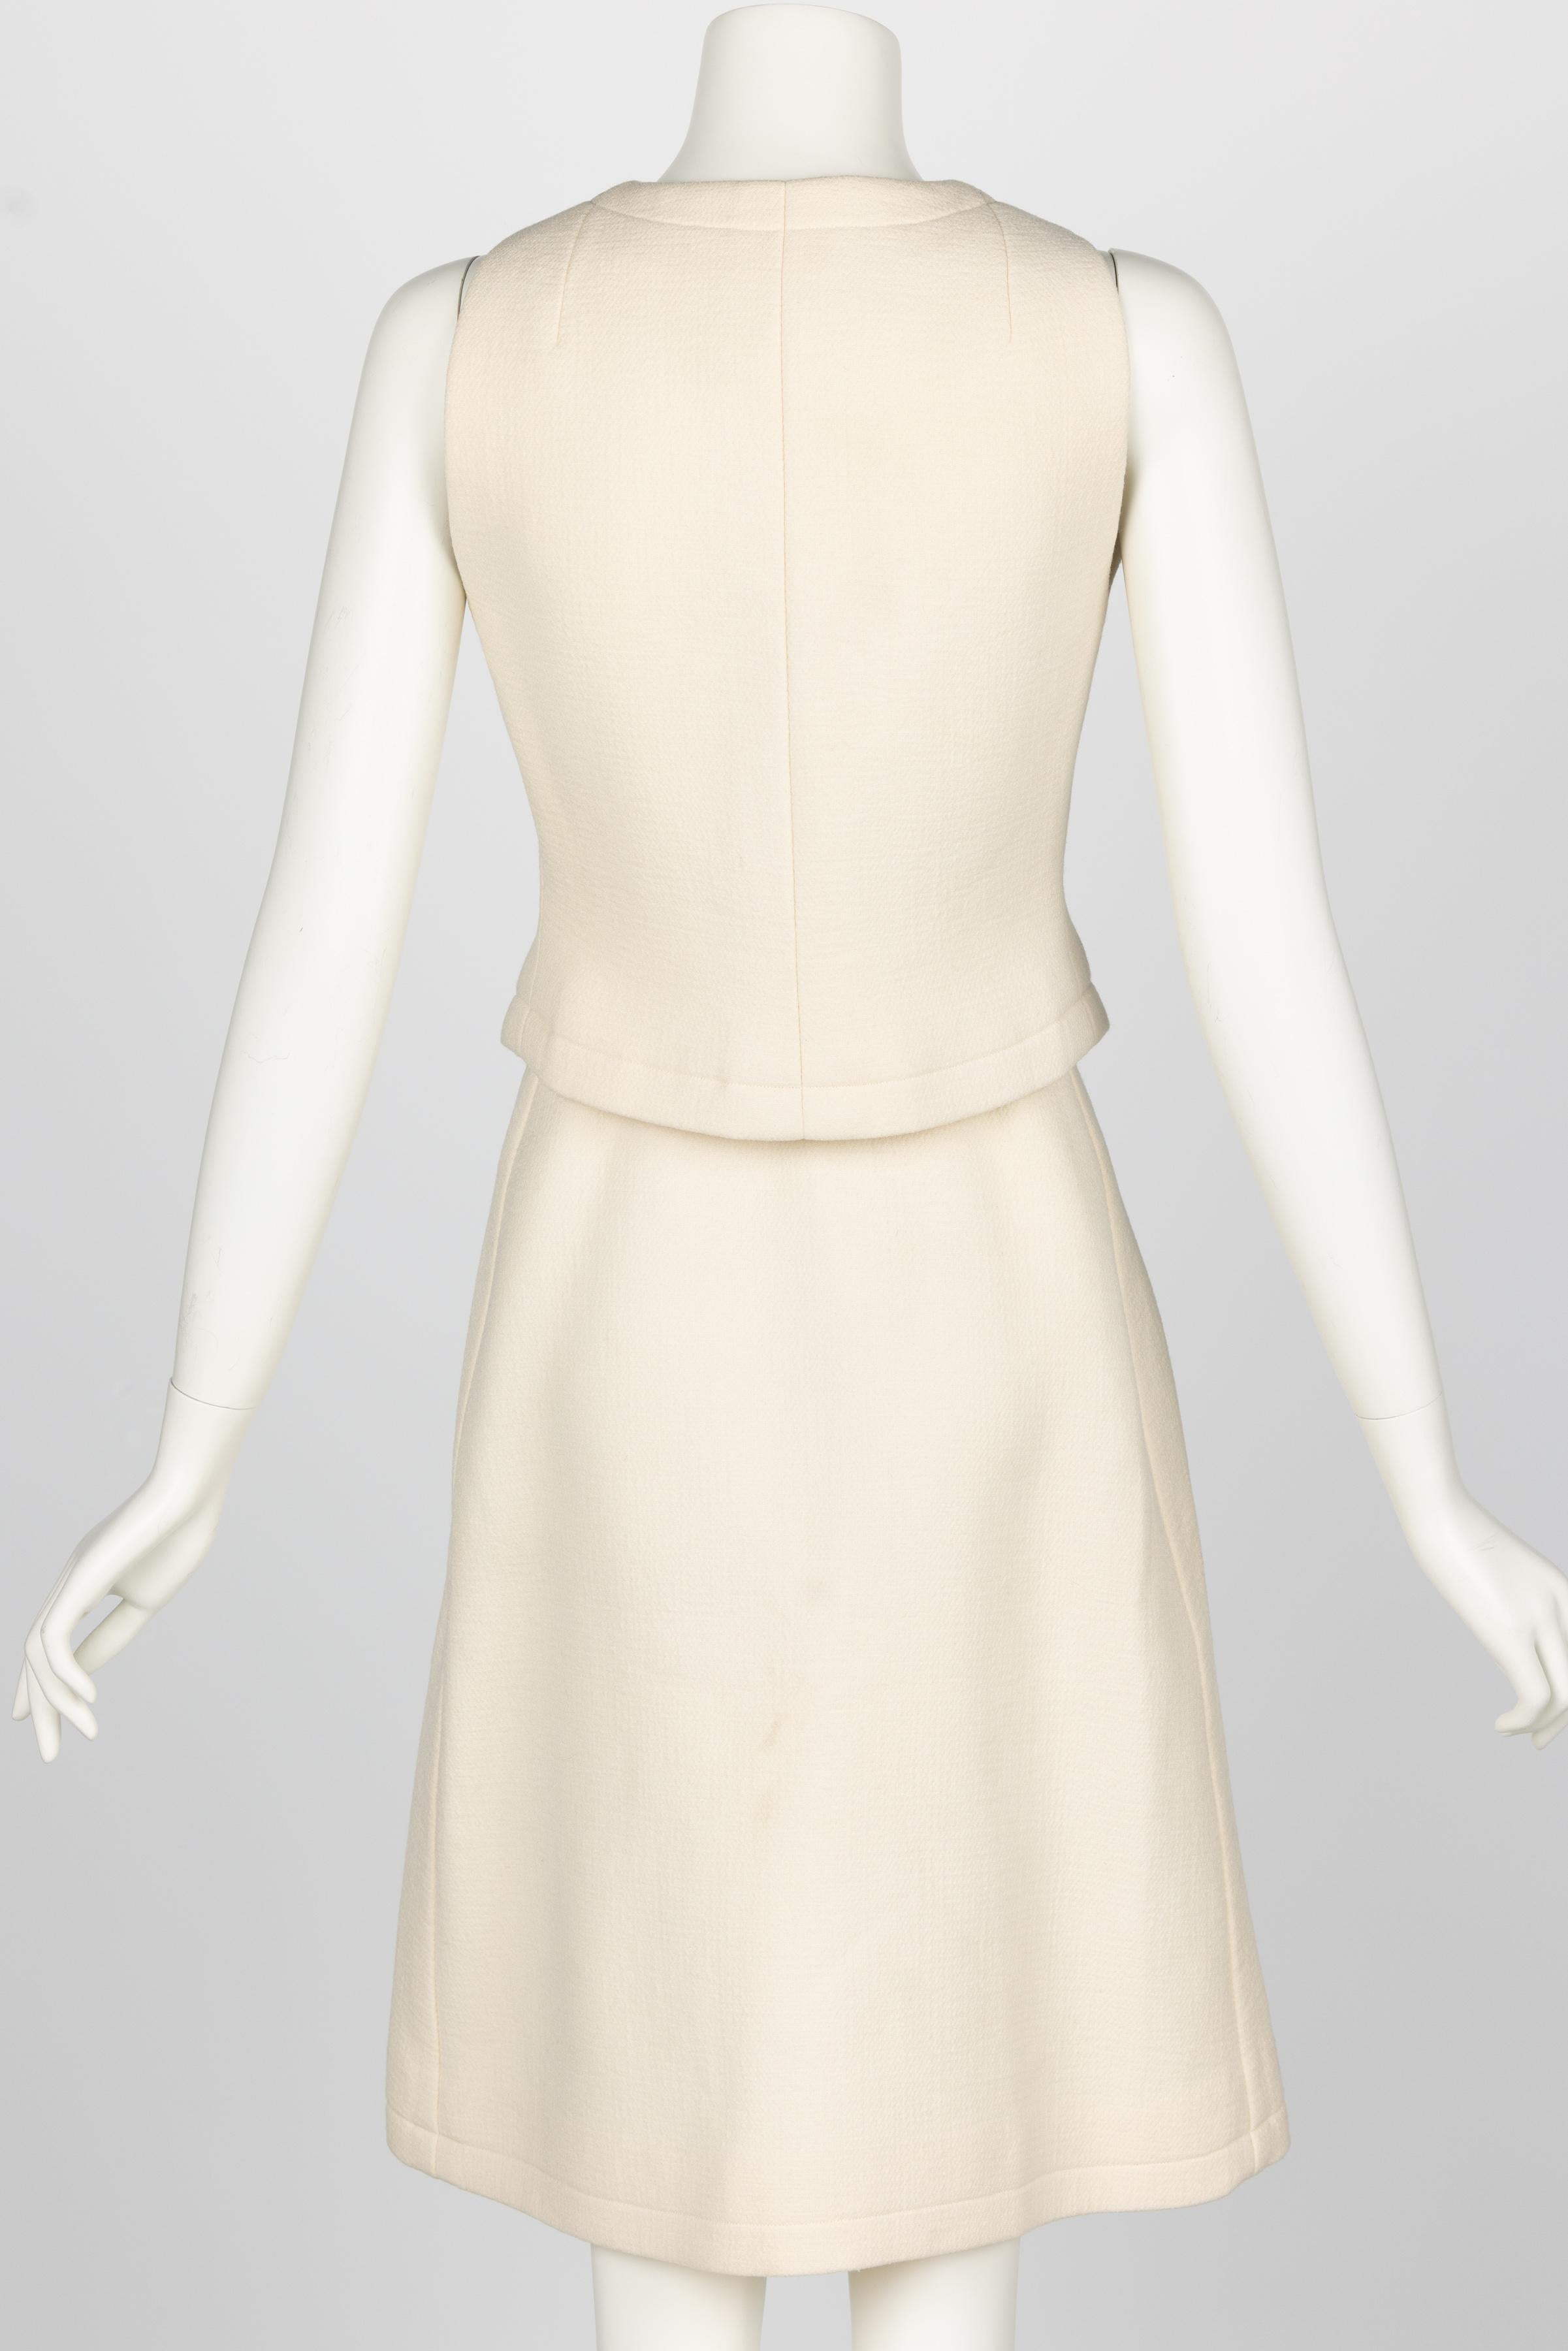 1960s Pauline Trigere Ivory & Black Tailored Vest Skirt Suit For Sale 2